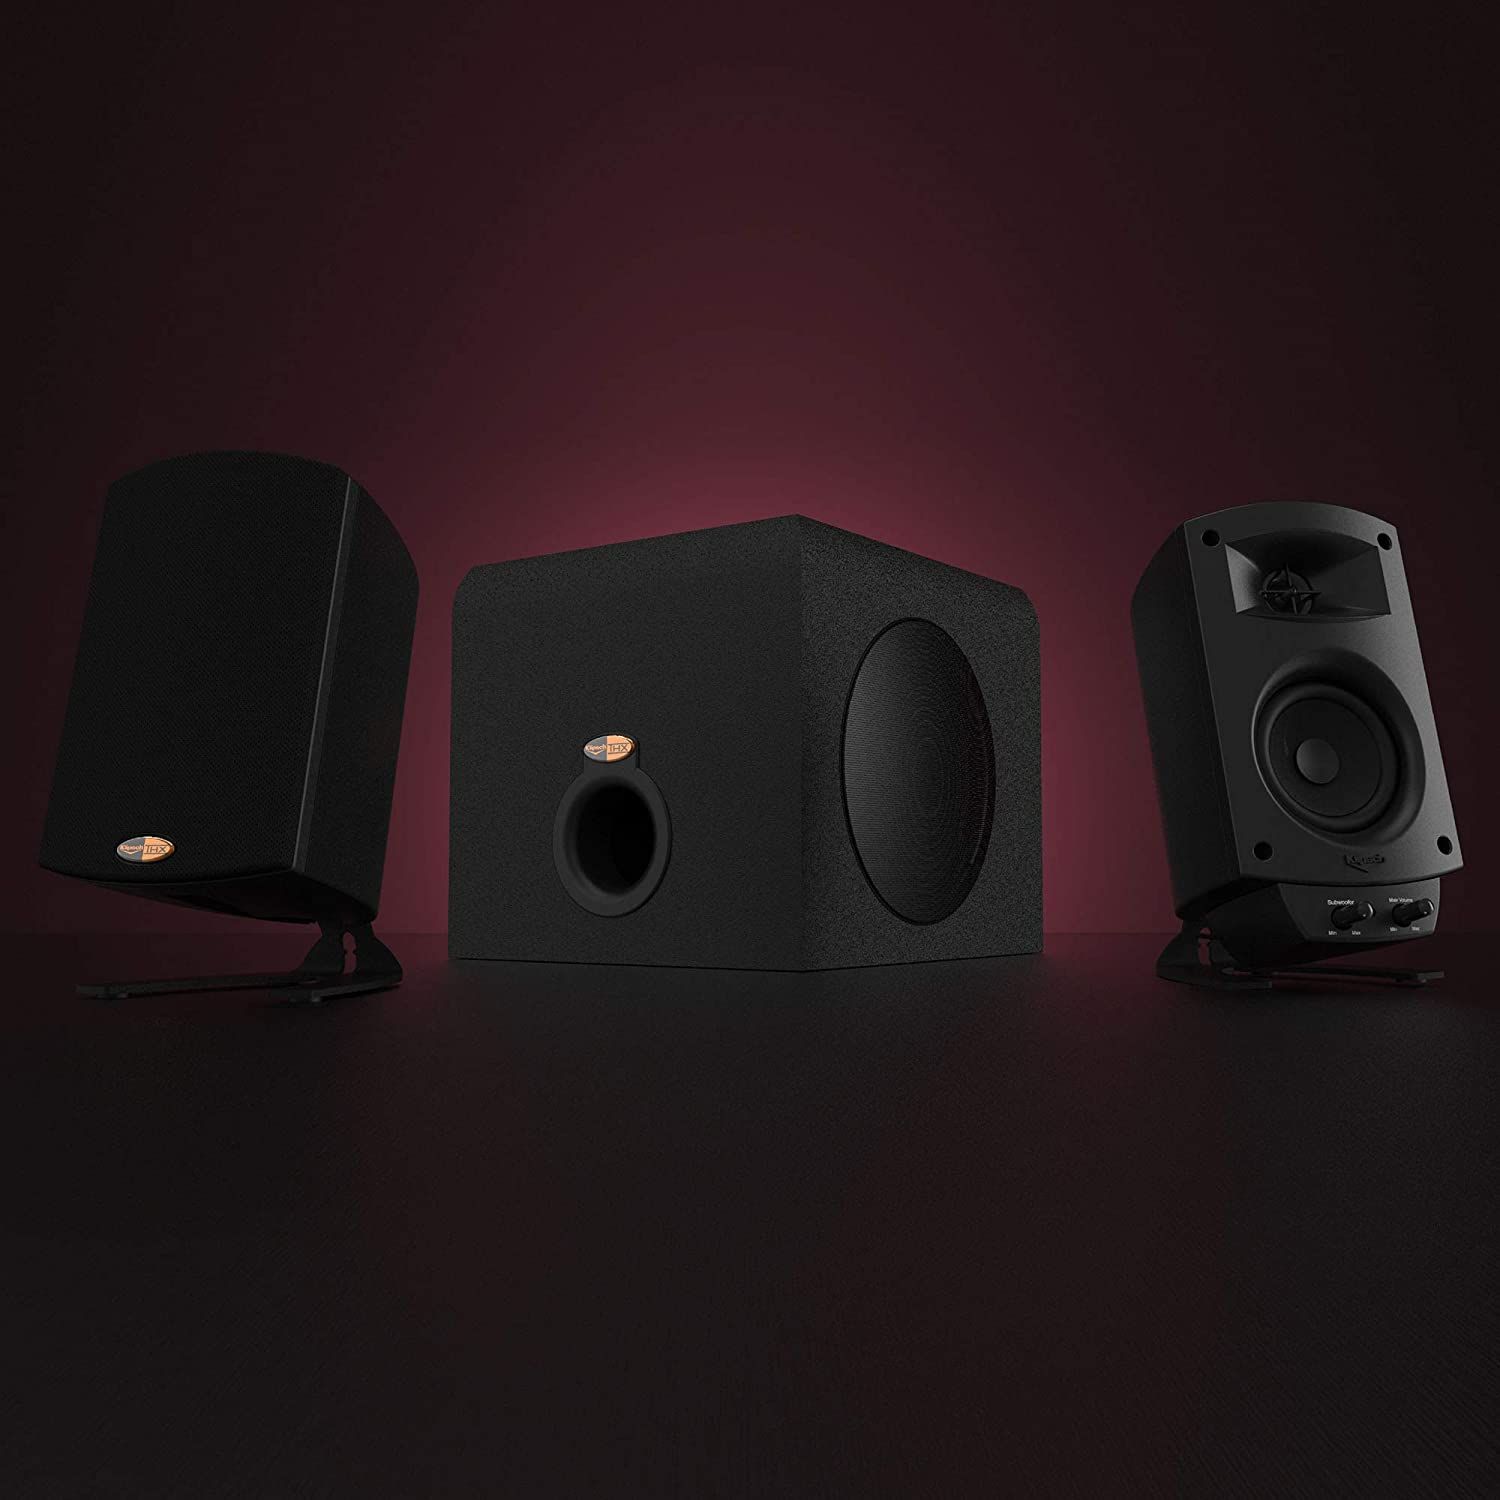 klipsch promedia 2.1 thx speakers against a maroon background